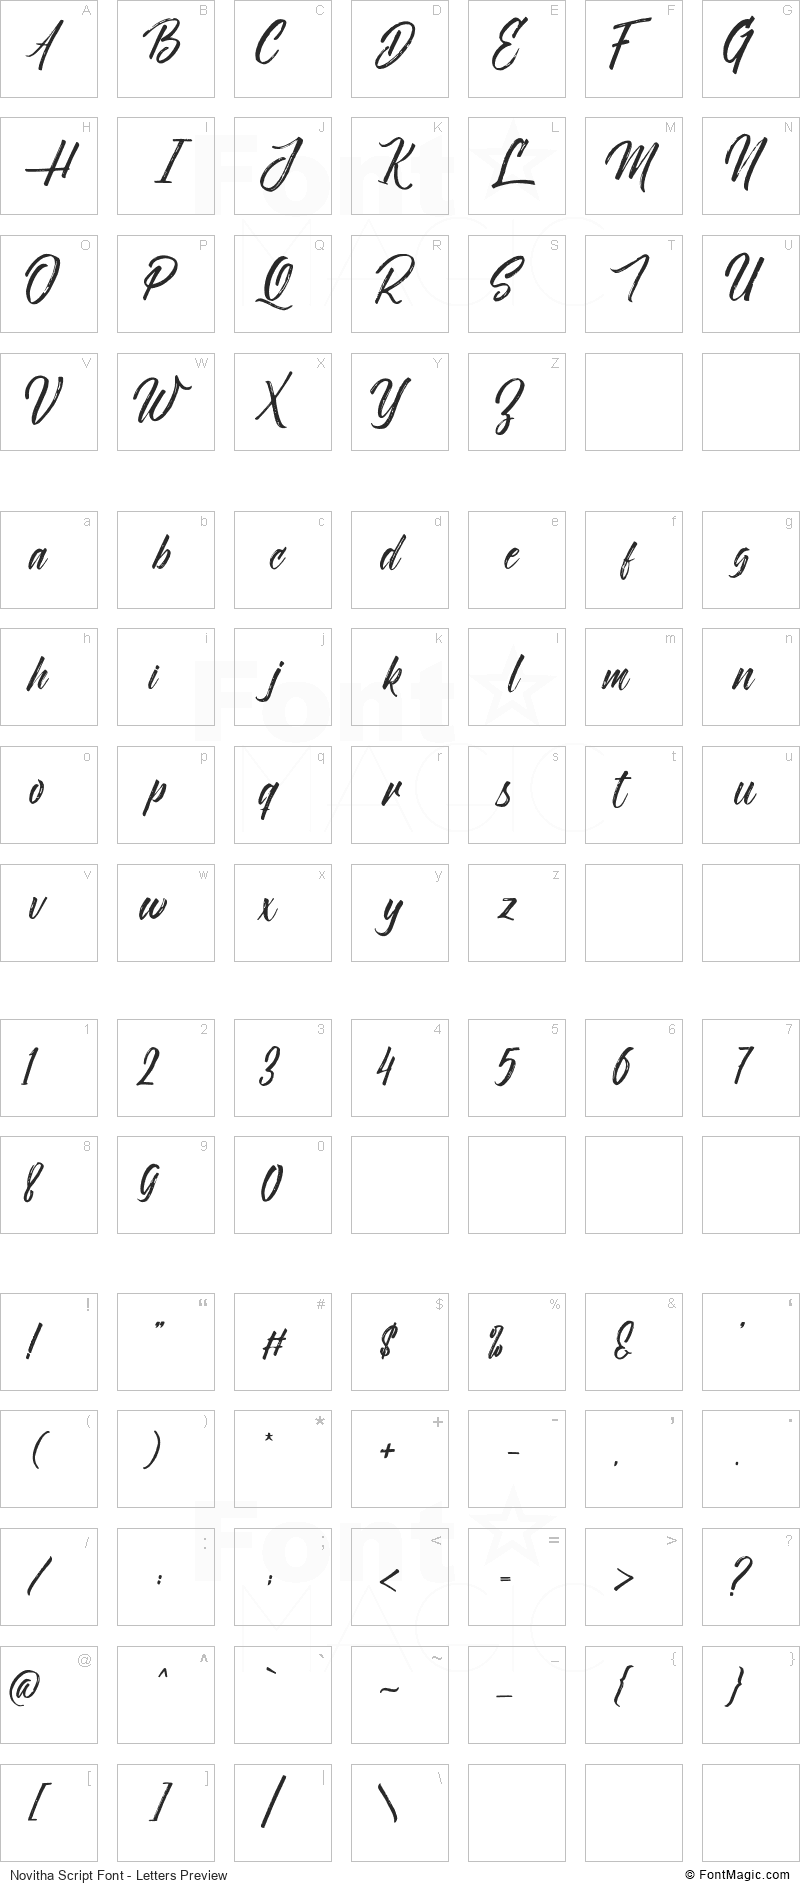 Novitha Script Font - All Latters Preview Chart